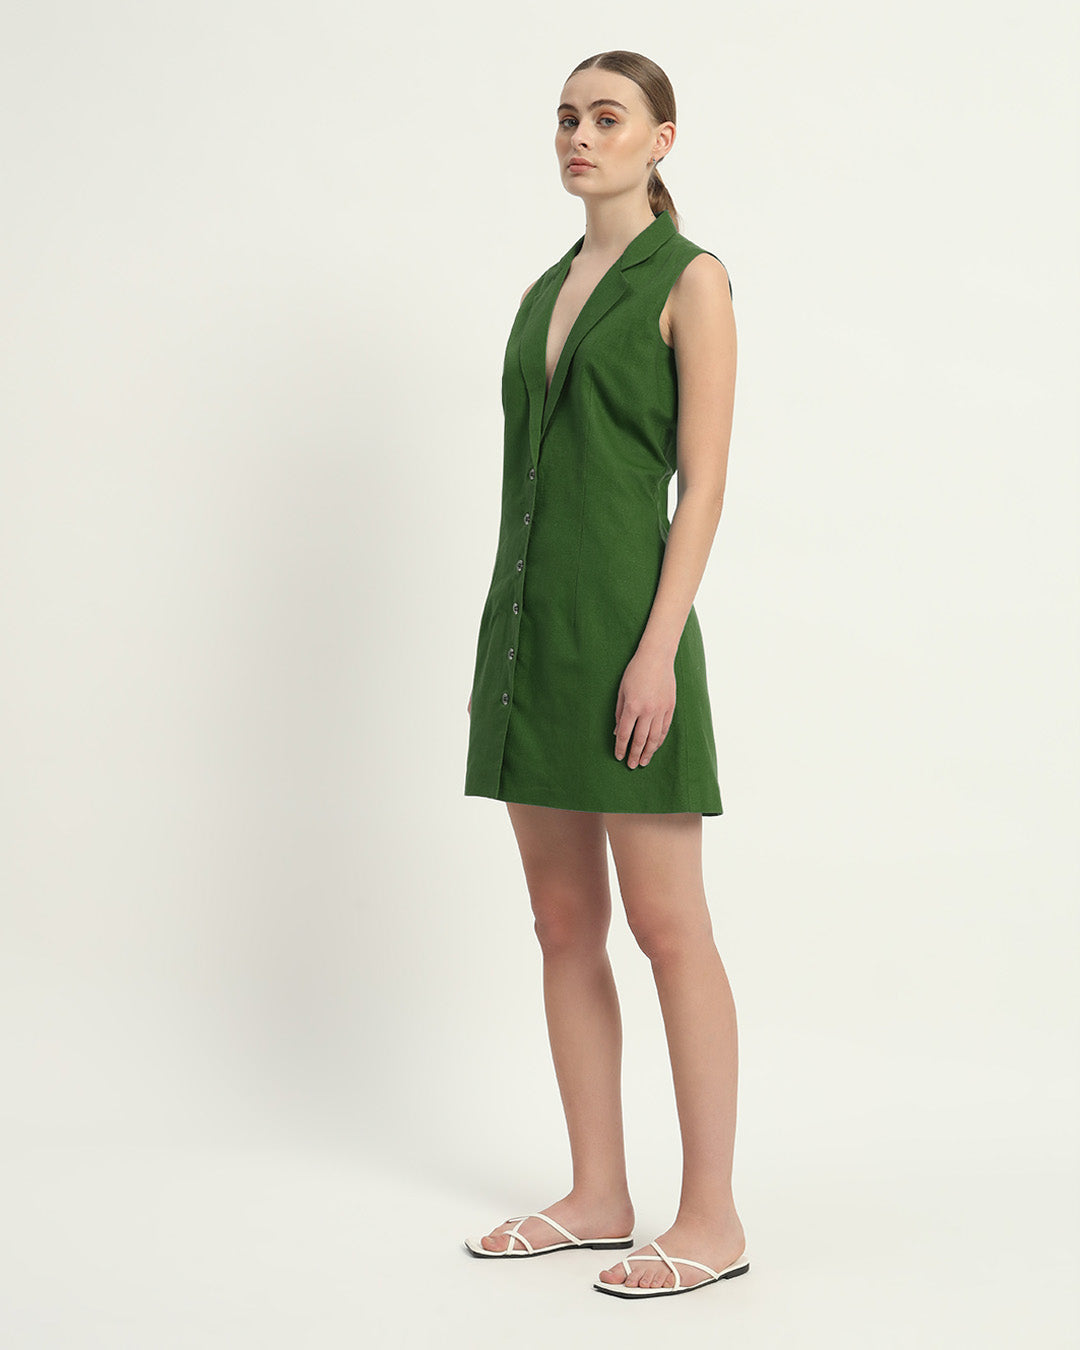 The Emerald Vernon Cotton Dress